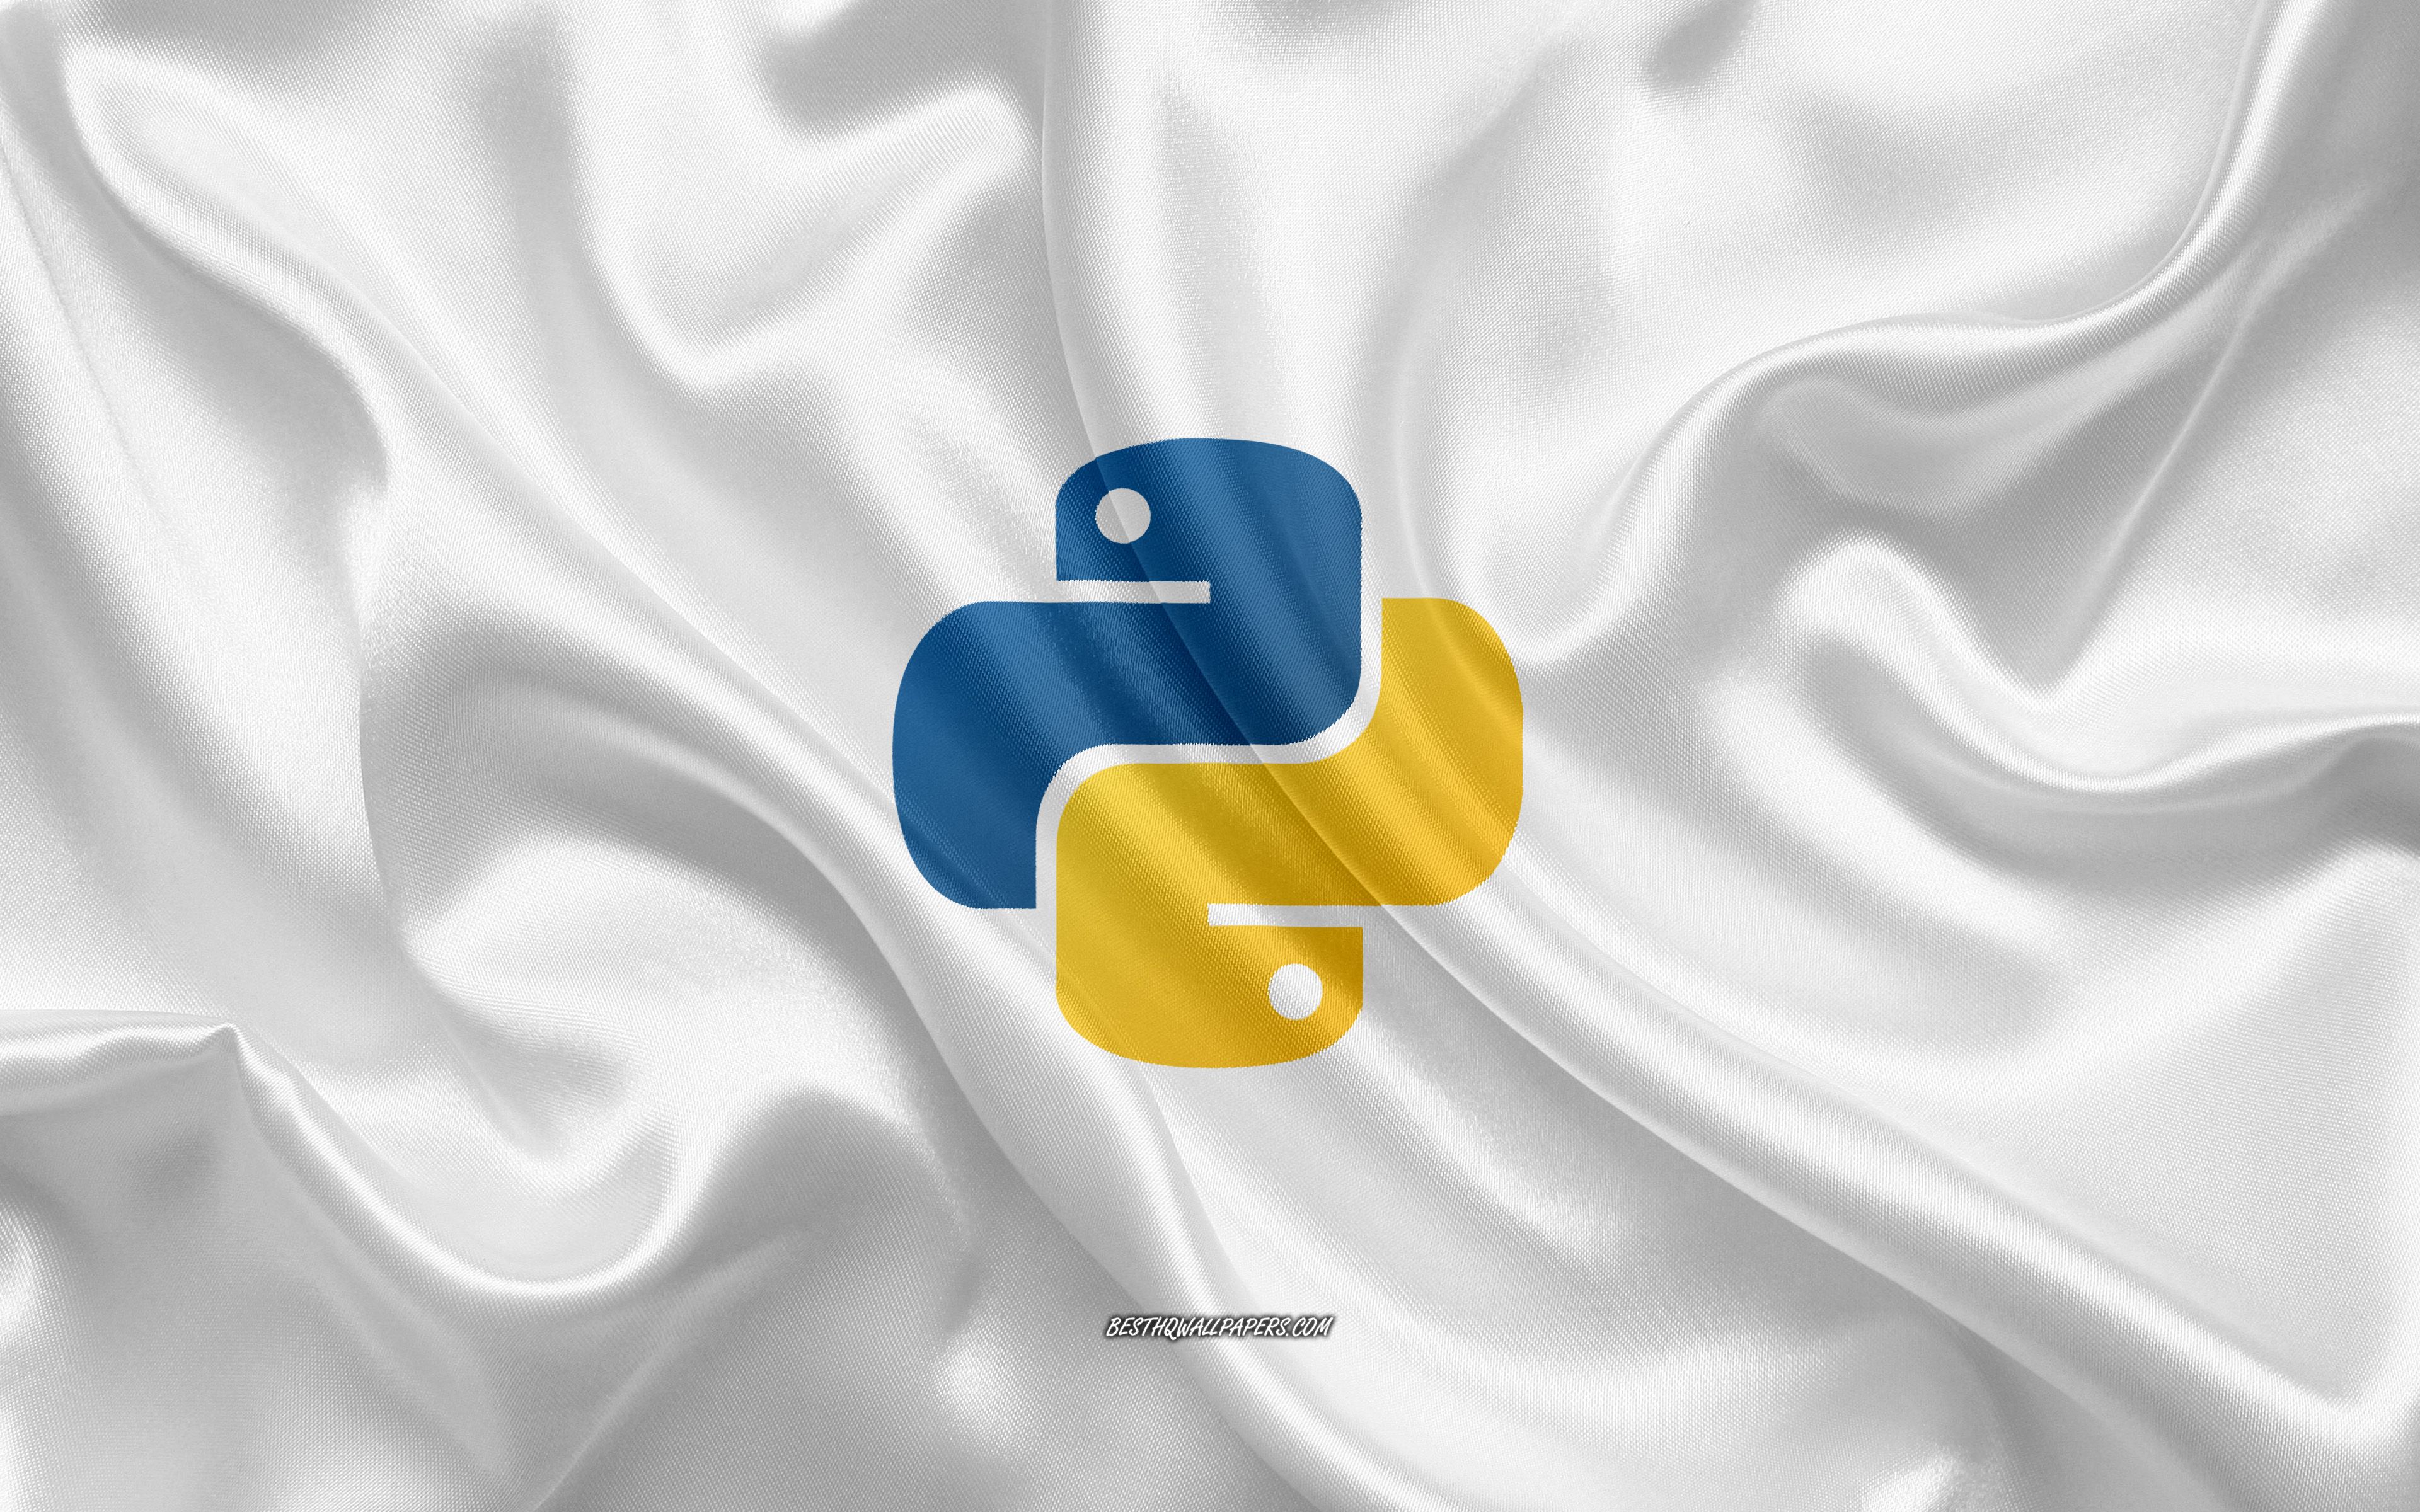 Download wallpaper Python logo, white silk texture, Python emblem, programming language, Python, silk background for desktop with resolution 3840x2400. High Quality HD picture wallpaper